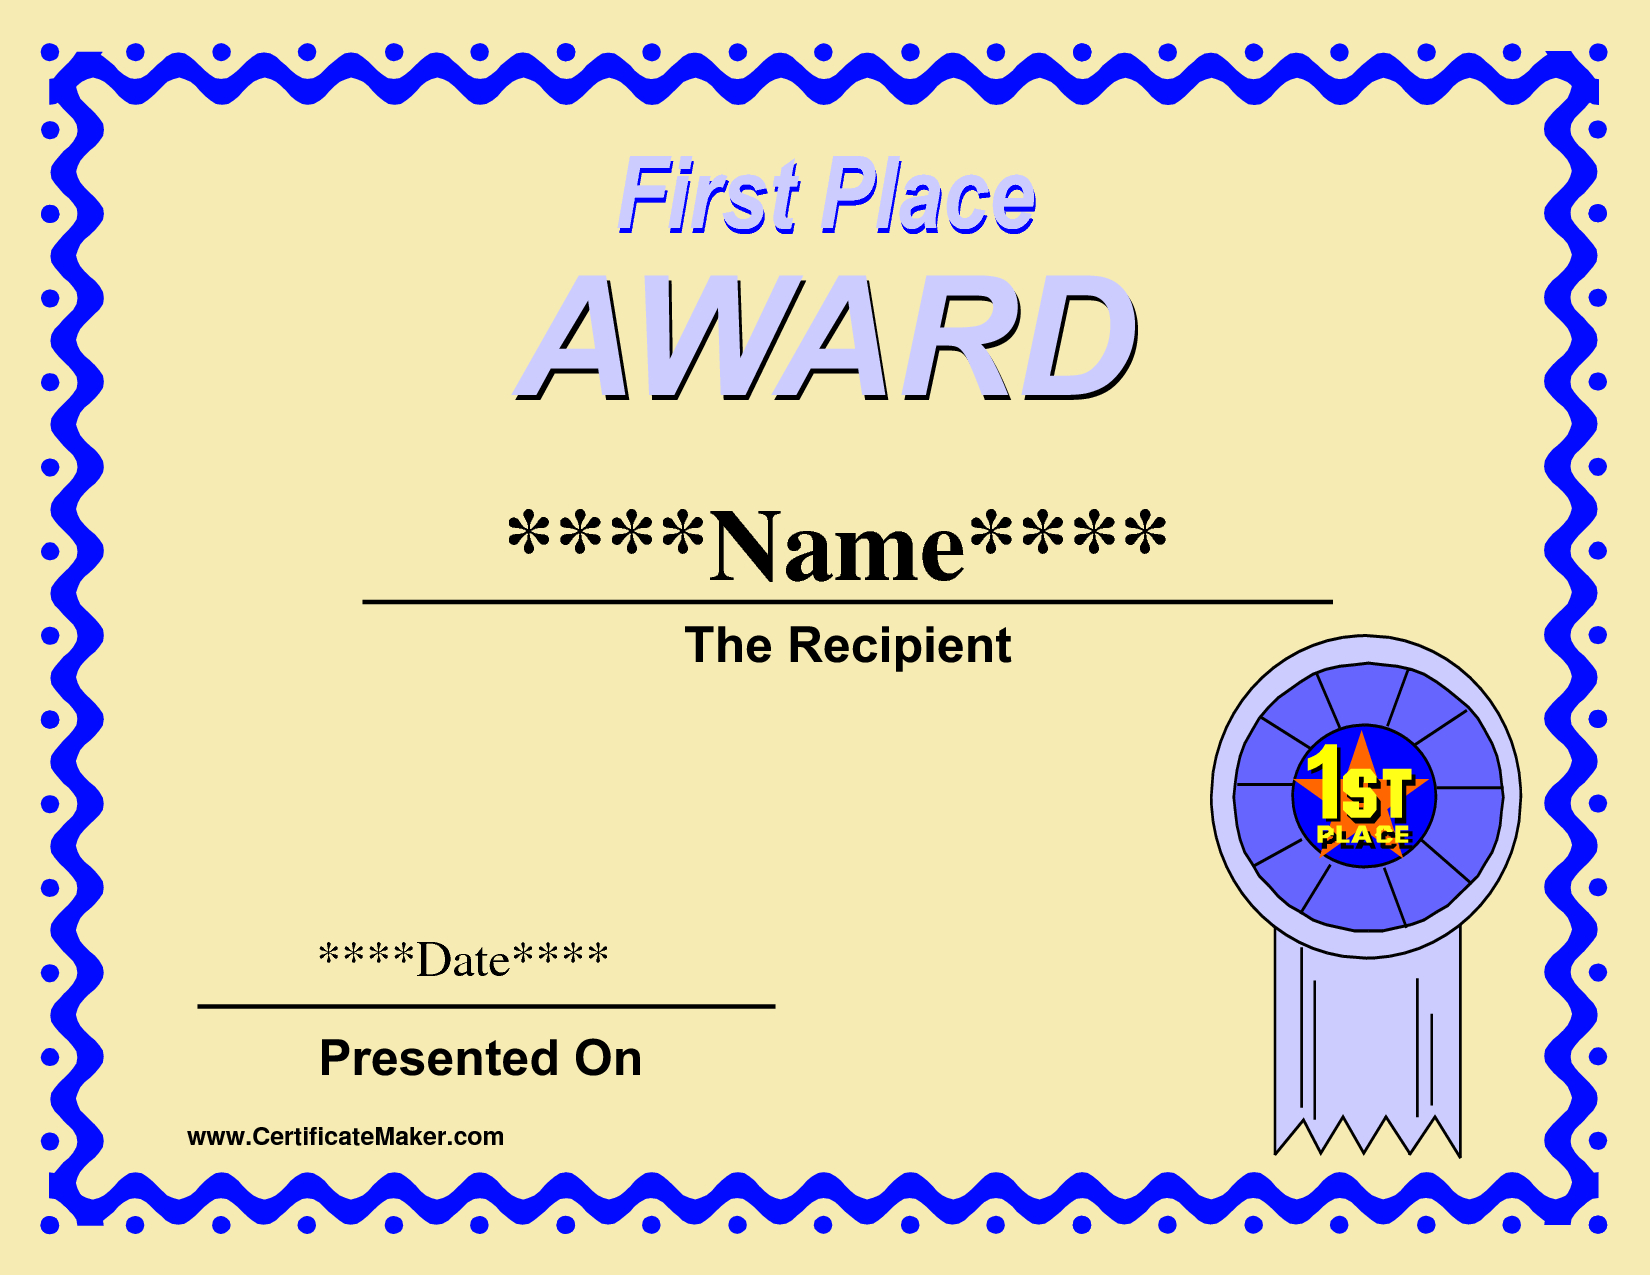 Prize Certificate Template Free ] – Certificate Template For First Place Award Certificate Template